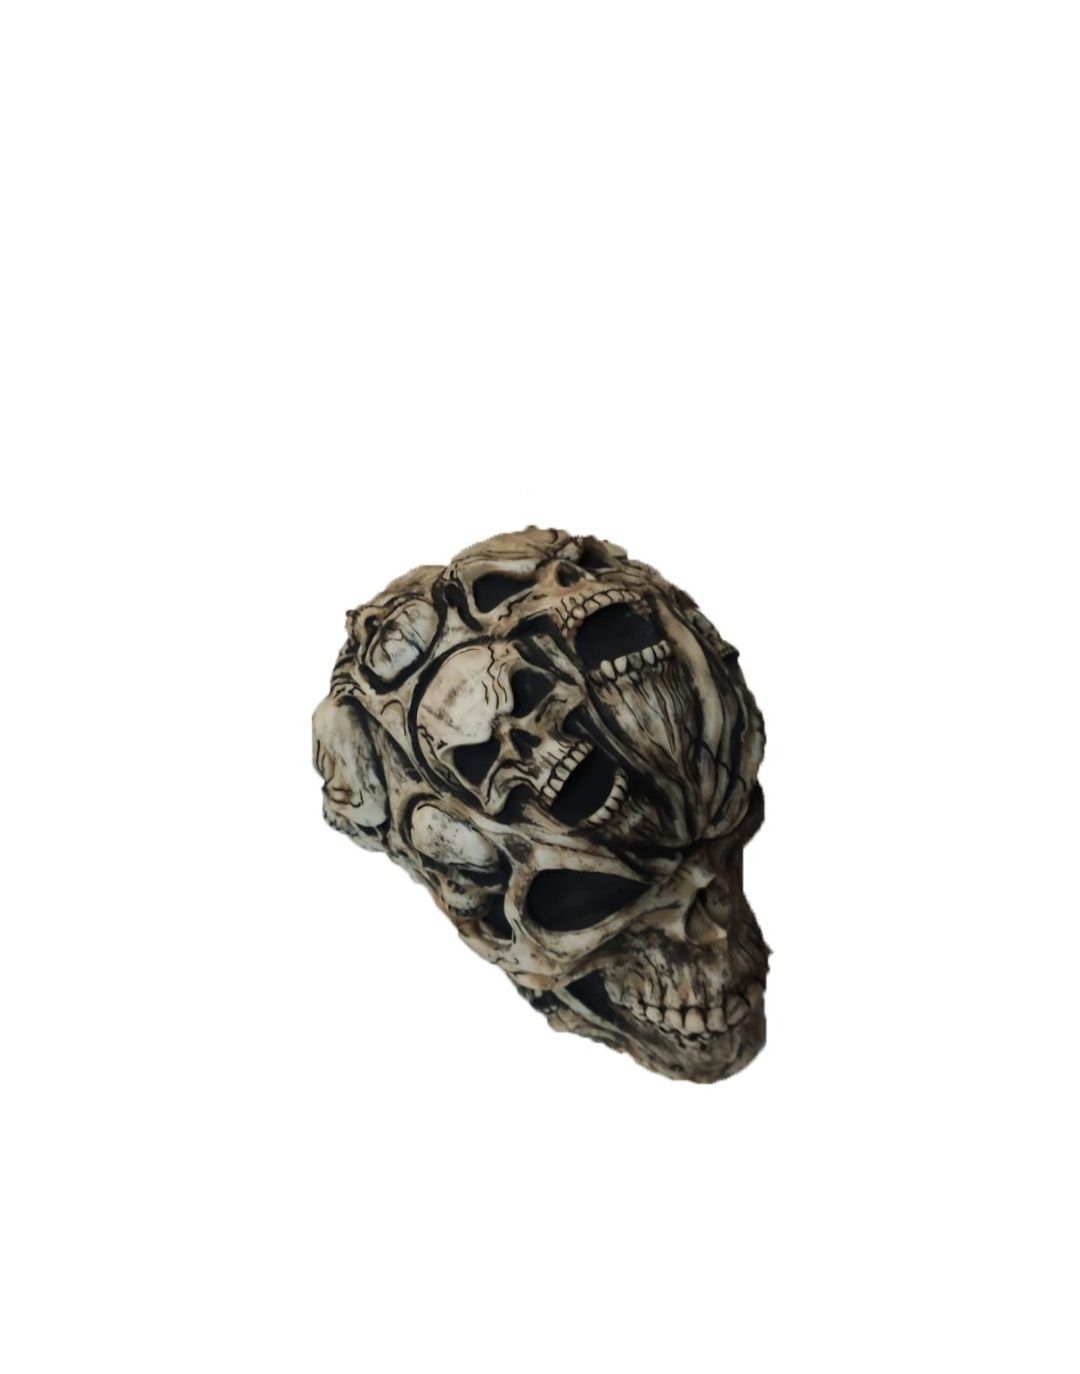 Craniu Uman Decoratiune Halloween goth rock metal punk unic handmade